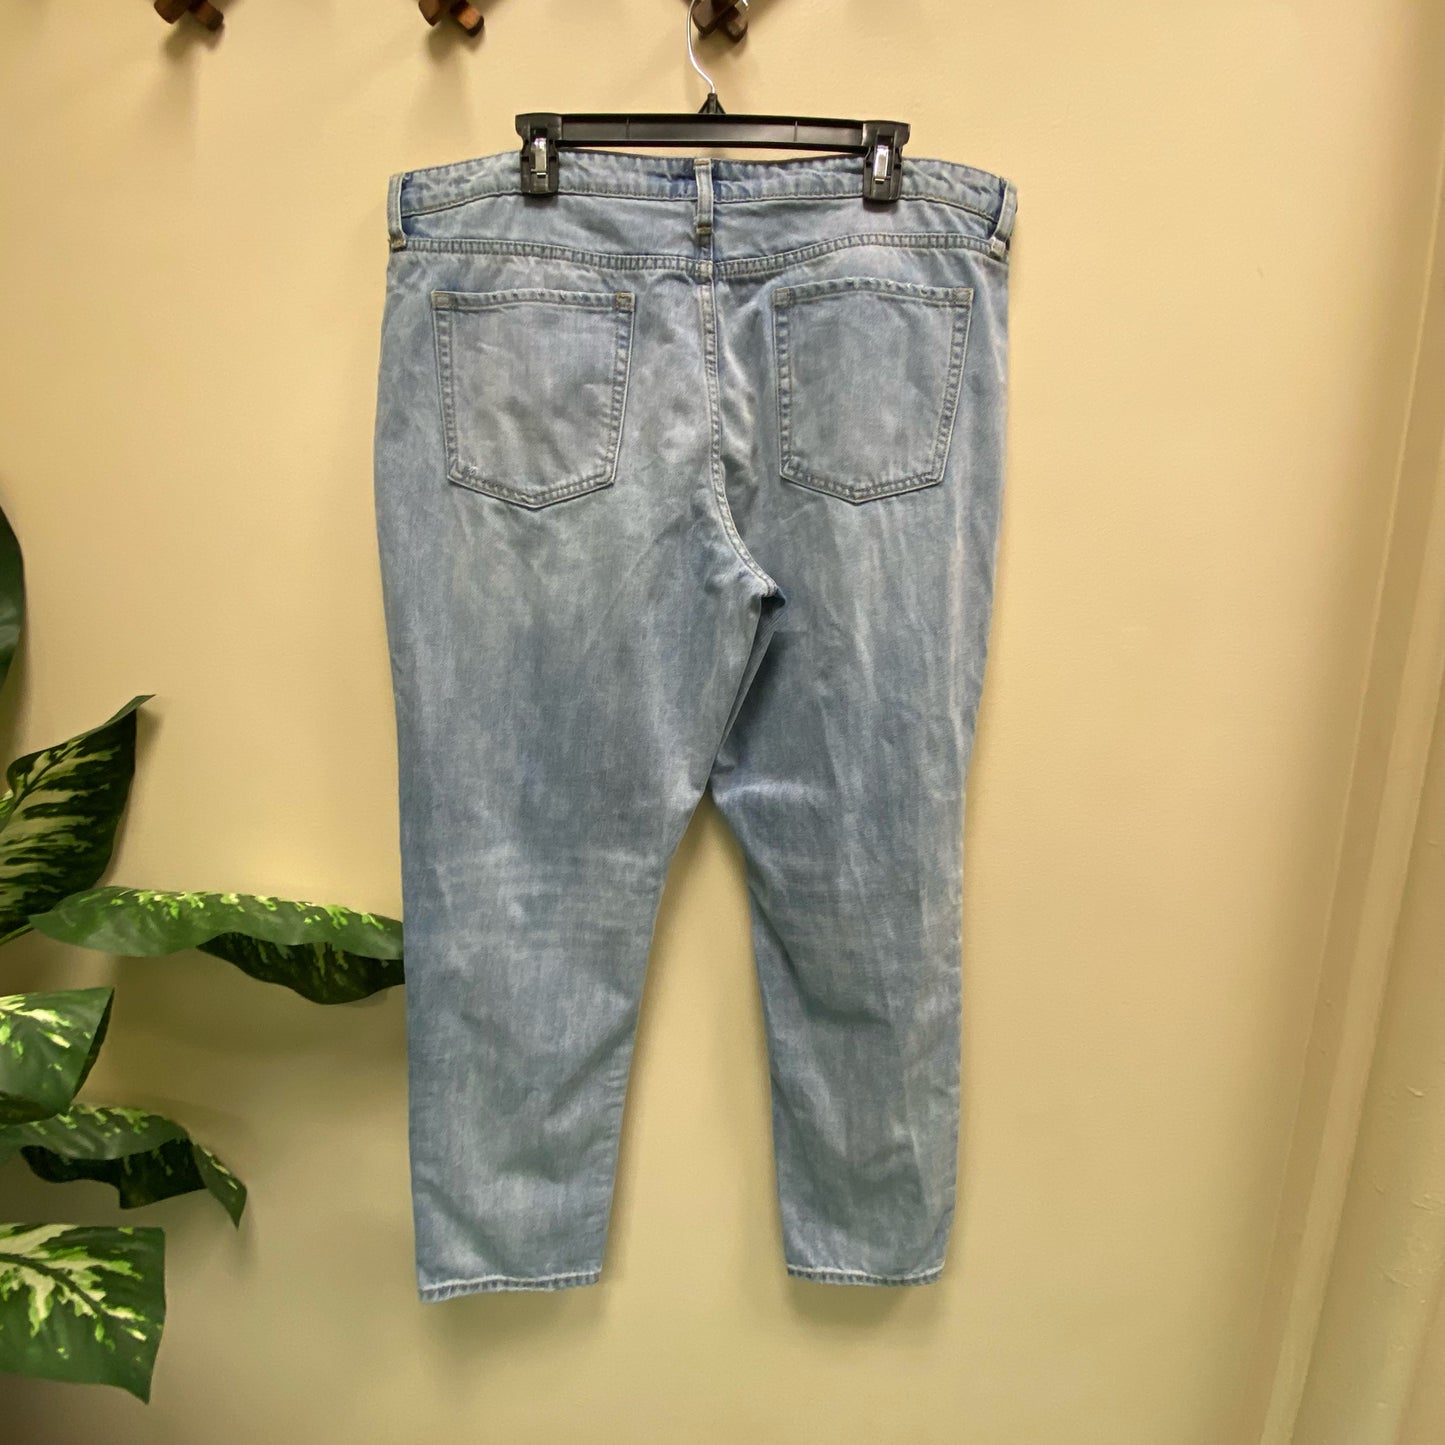 Gap "Sexy Boyfriend" Jeans - Size 33 (16)